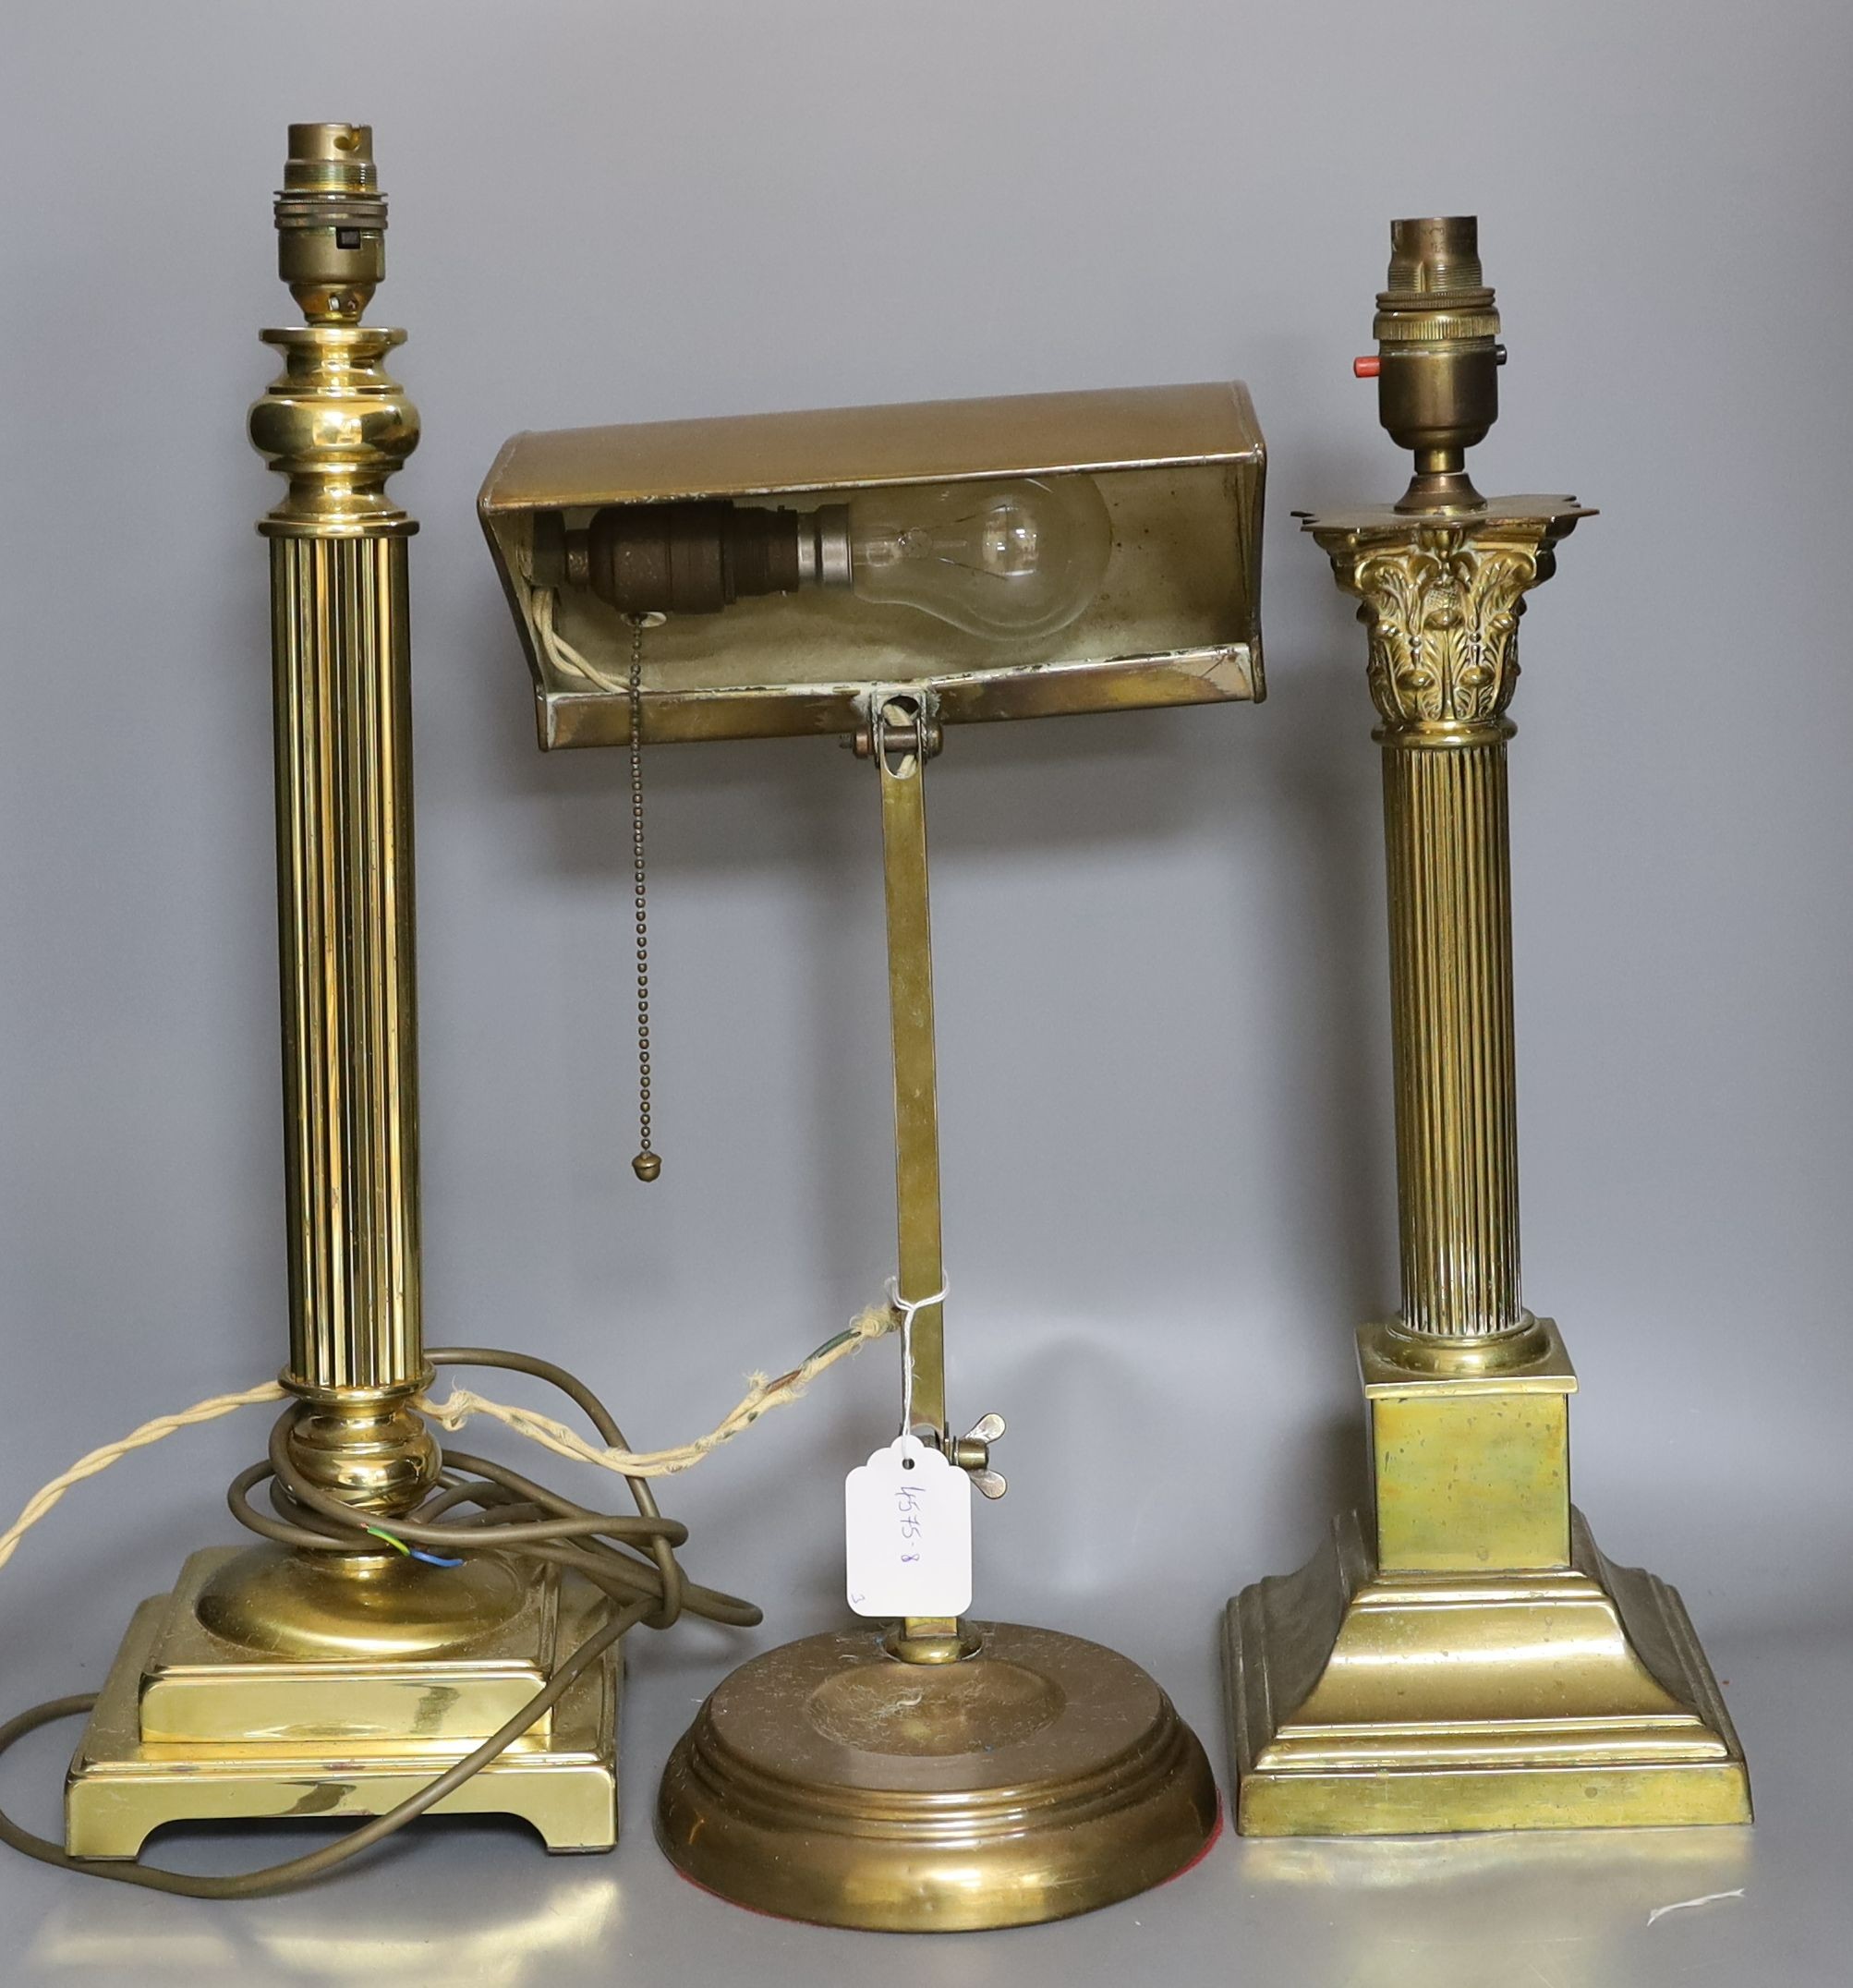 An Edwardian banker's lamp and two Corinthian column lamps - tallest 49cm